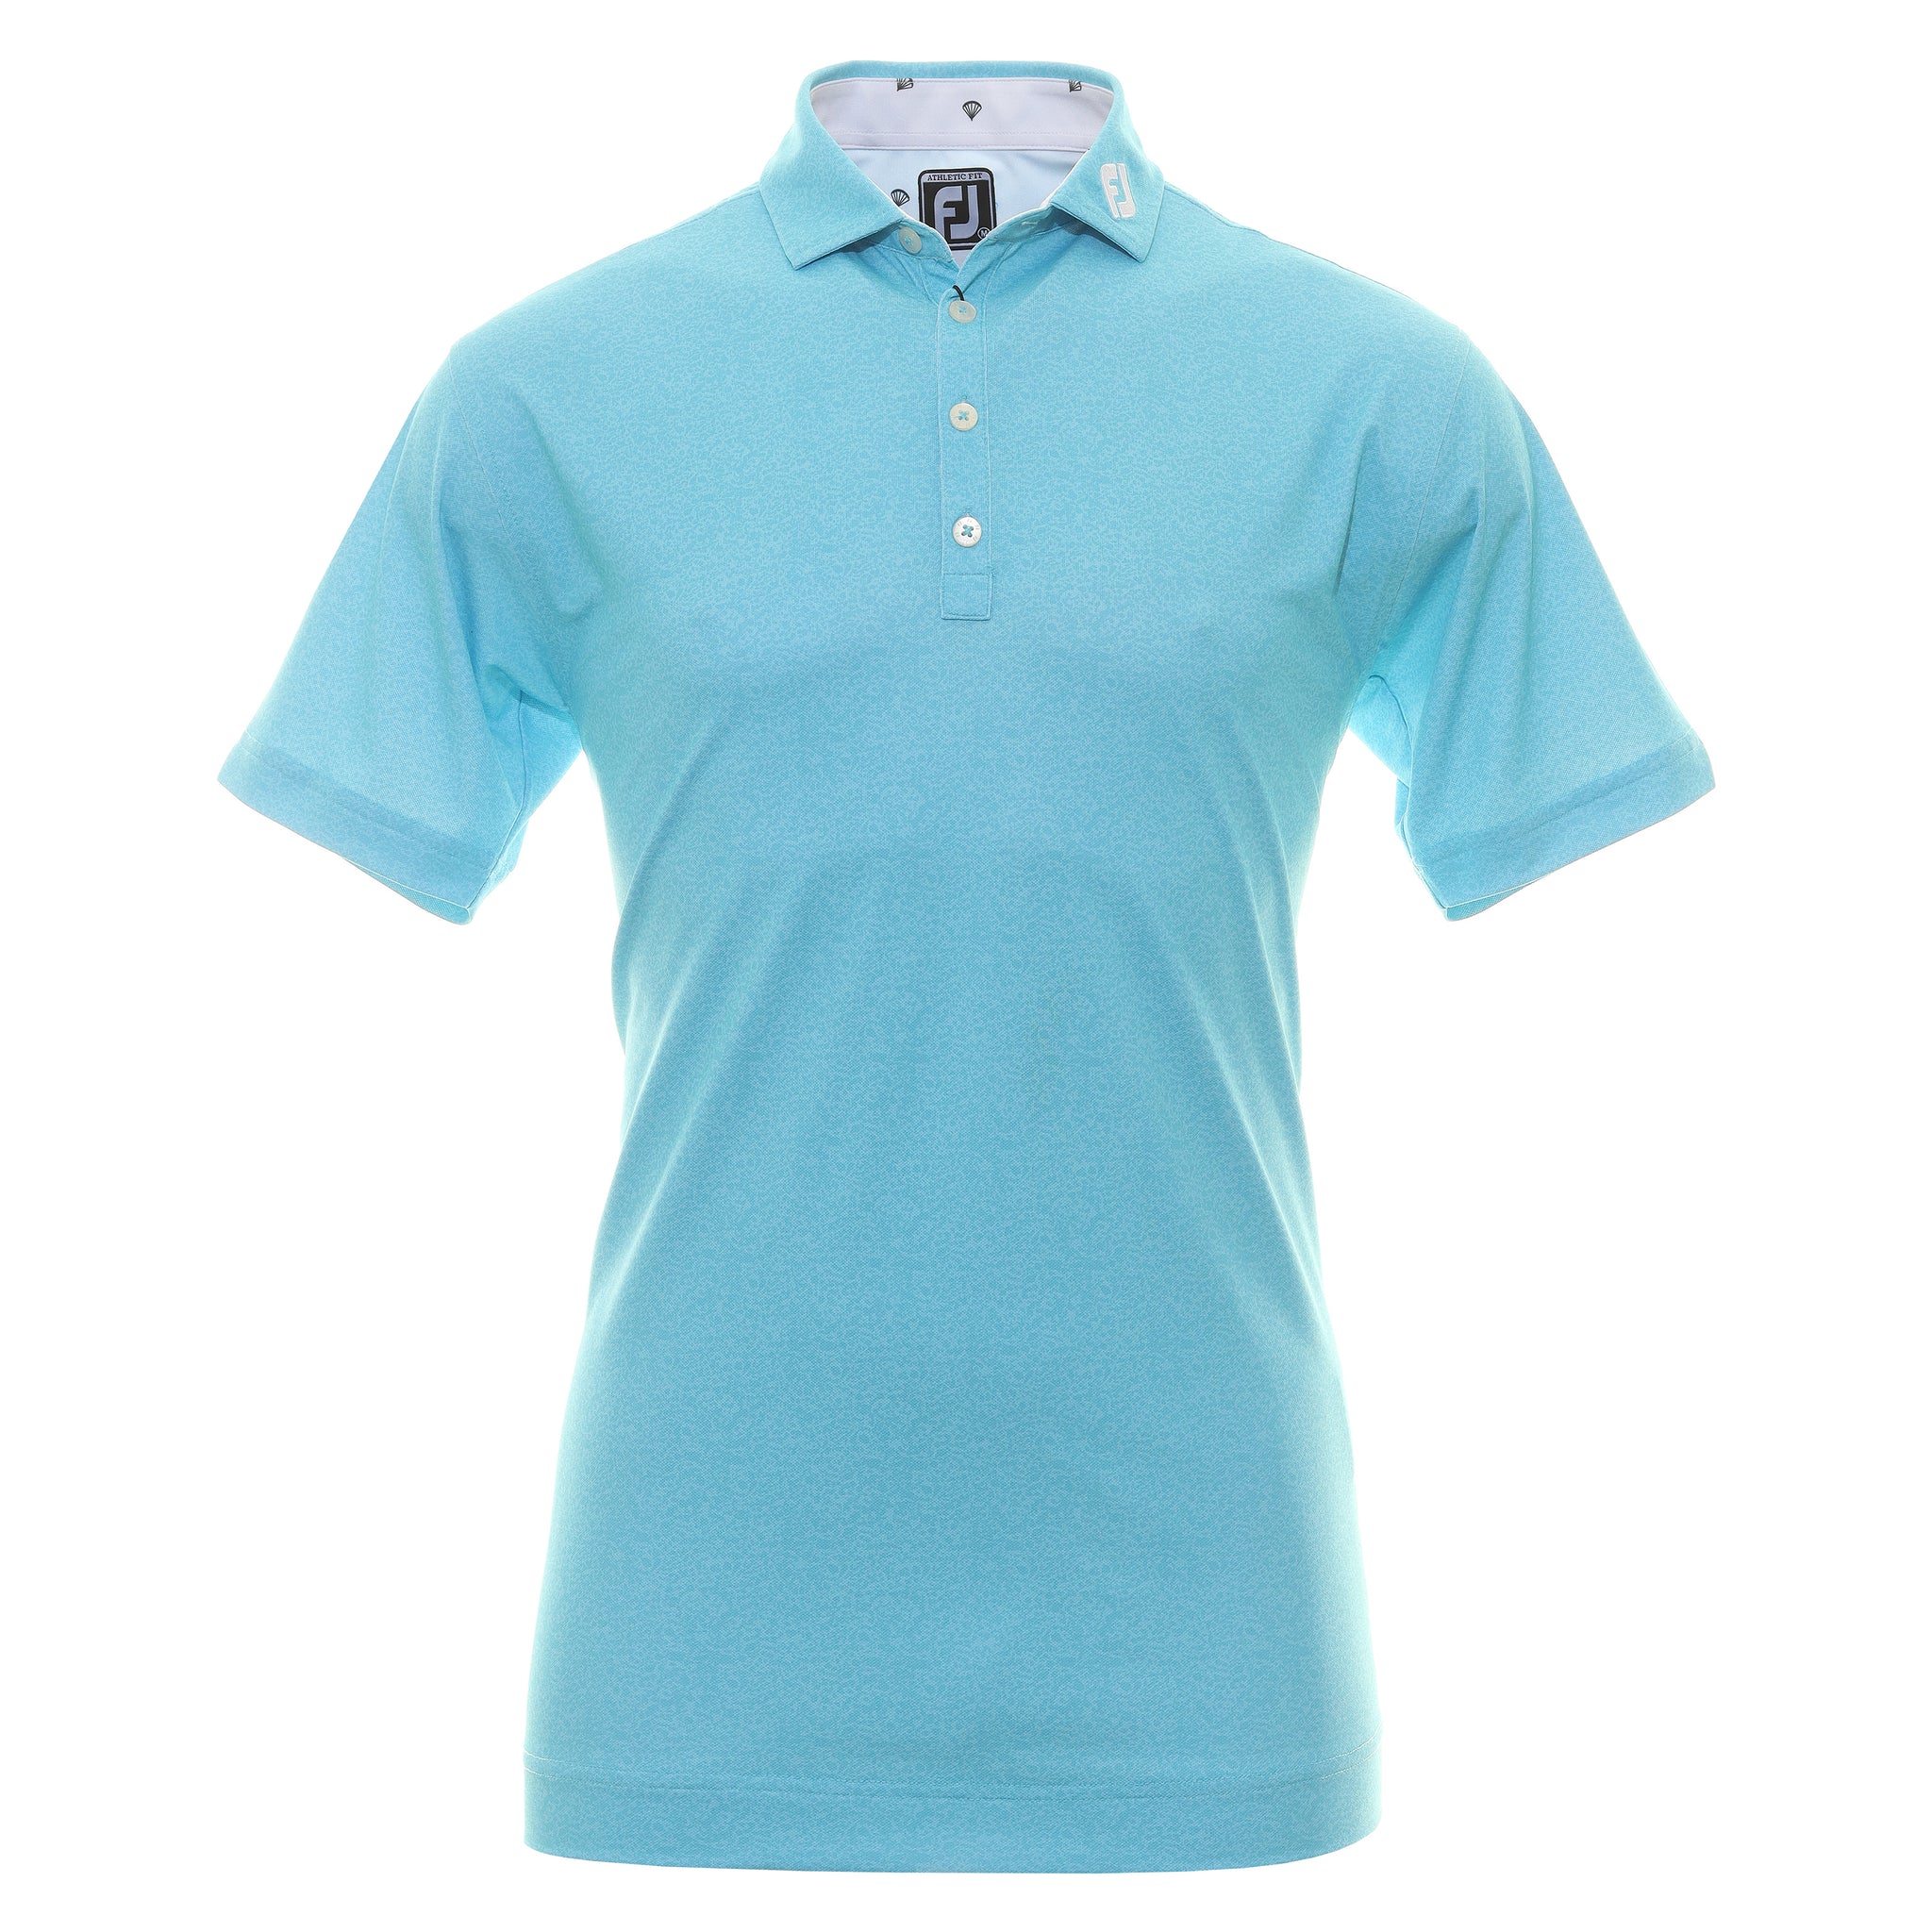 FootJoy Texture Print Pique Golf Shirt 89896 Pool | Function18